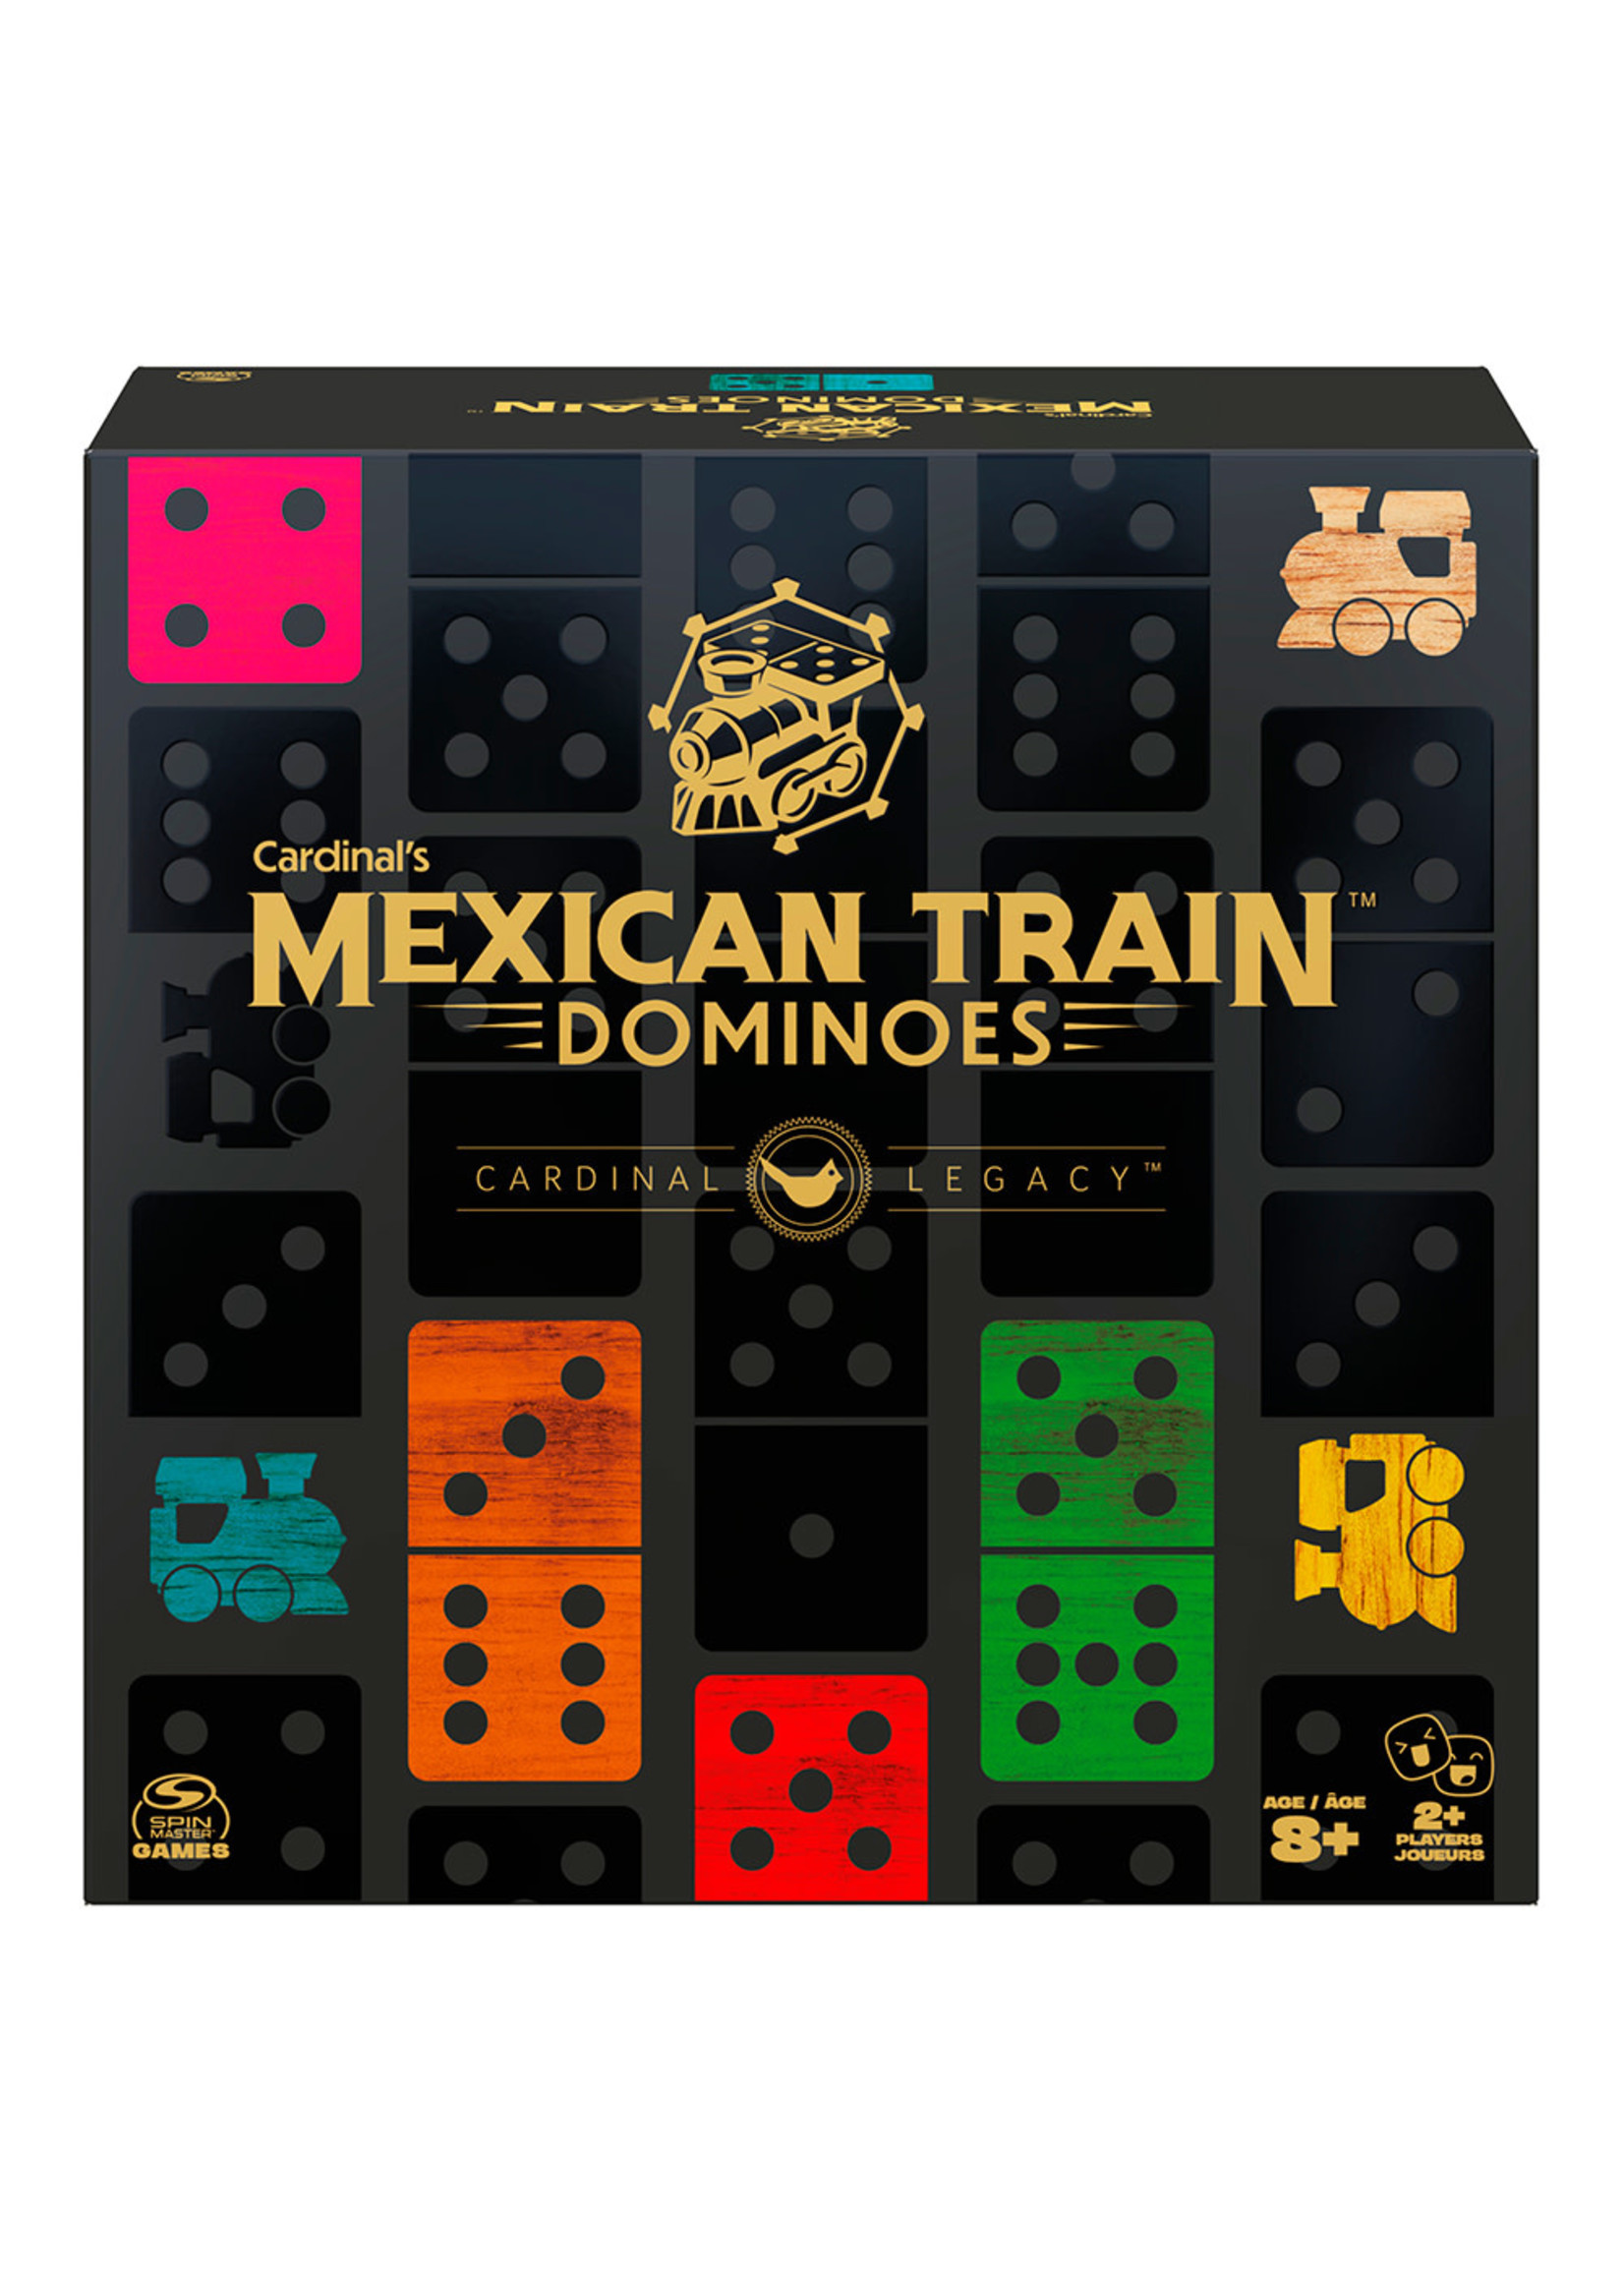 Spin Master Dominos Train mexicain de luxe